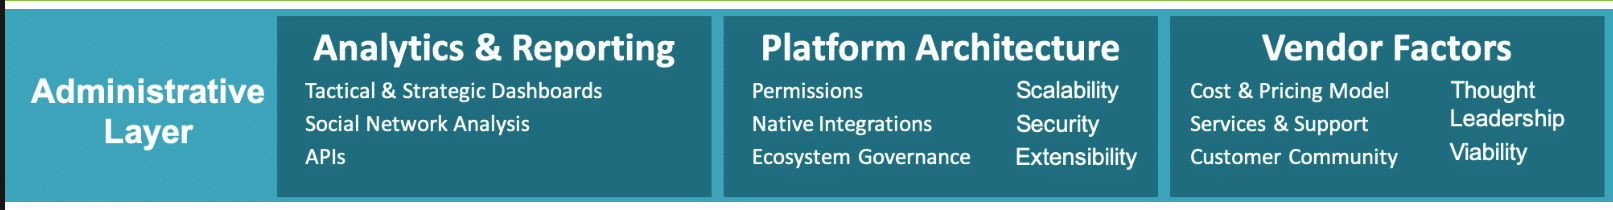 Community Technology Framework - Administrative Layer